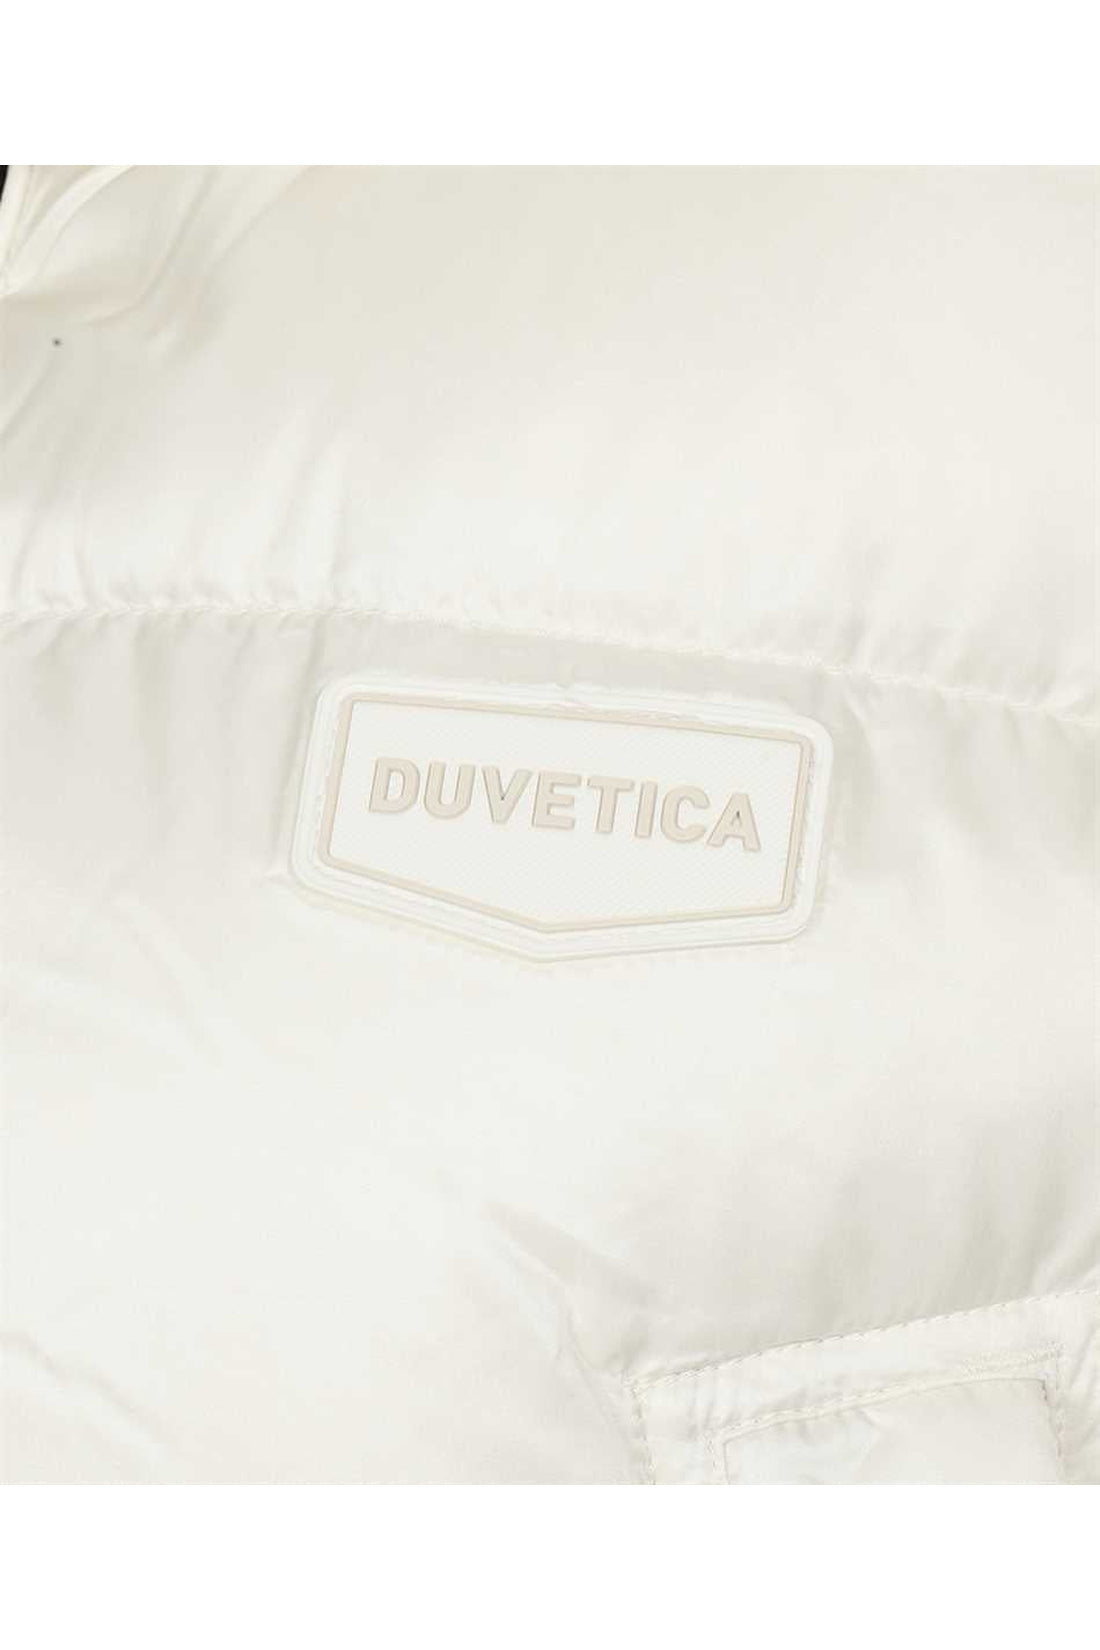 Duvetica-OUTLET-SALE-Vindemiatrix padded bodywarmer-ARCHIVIST